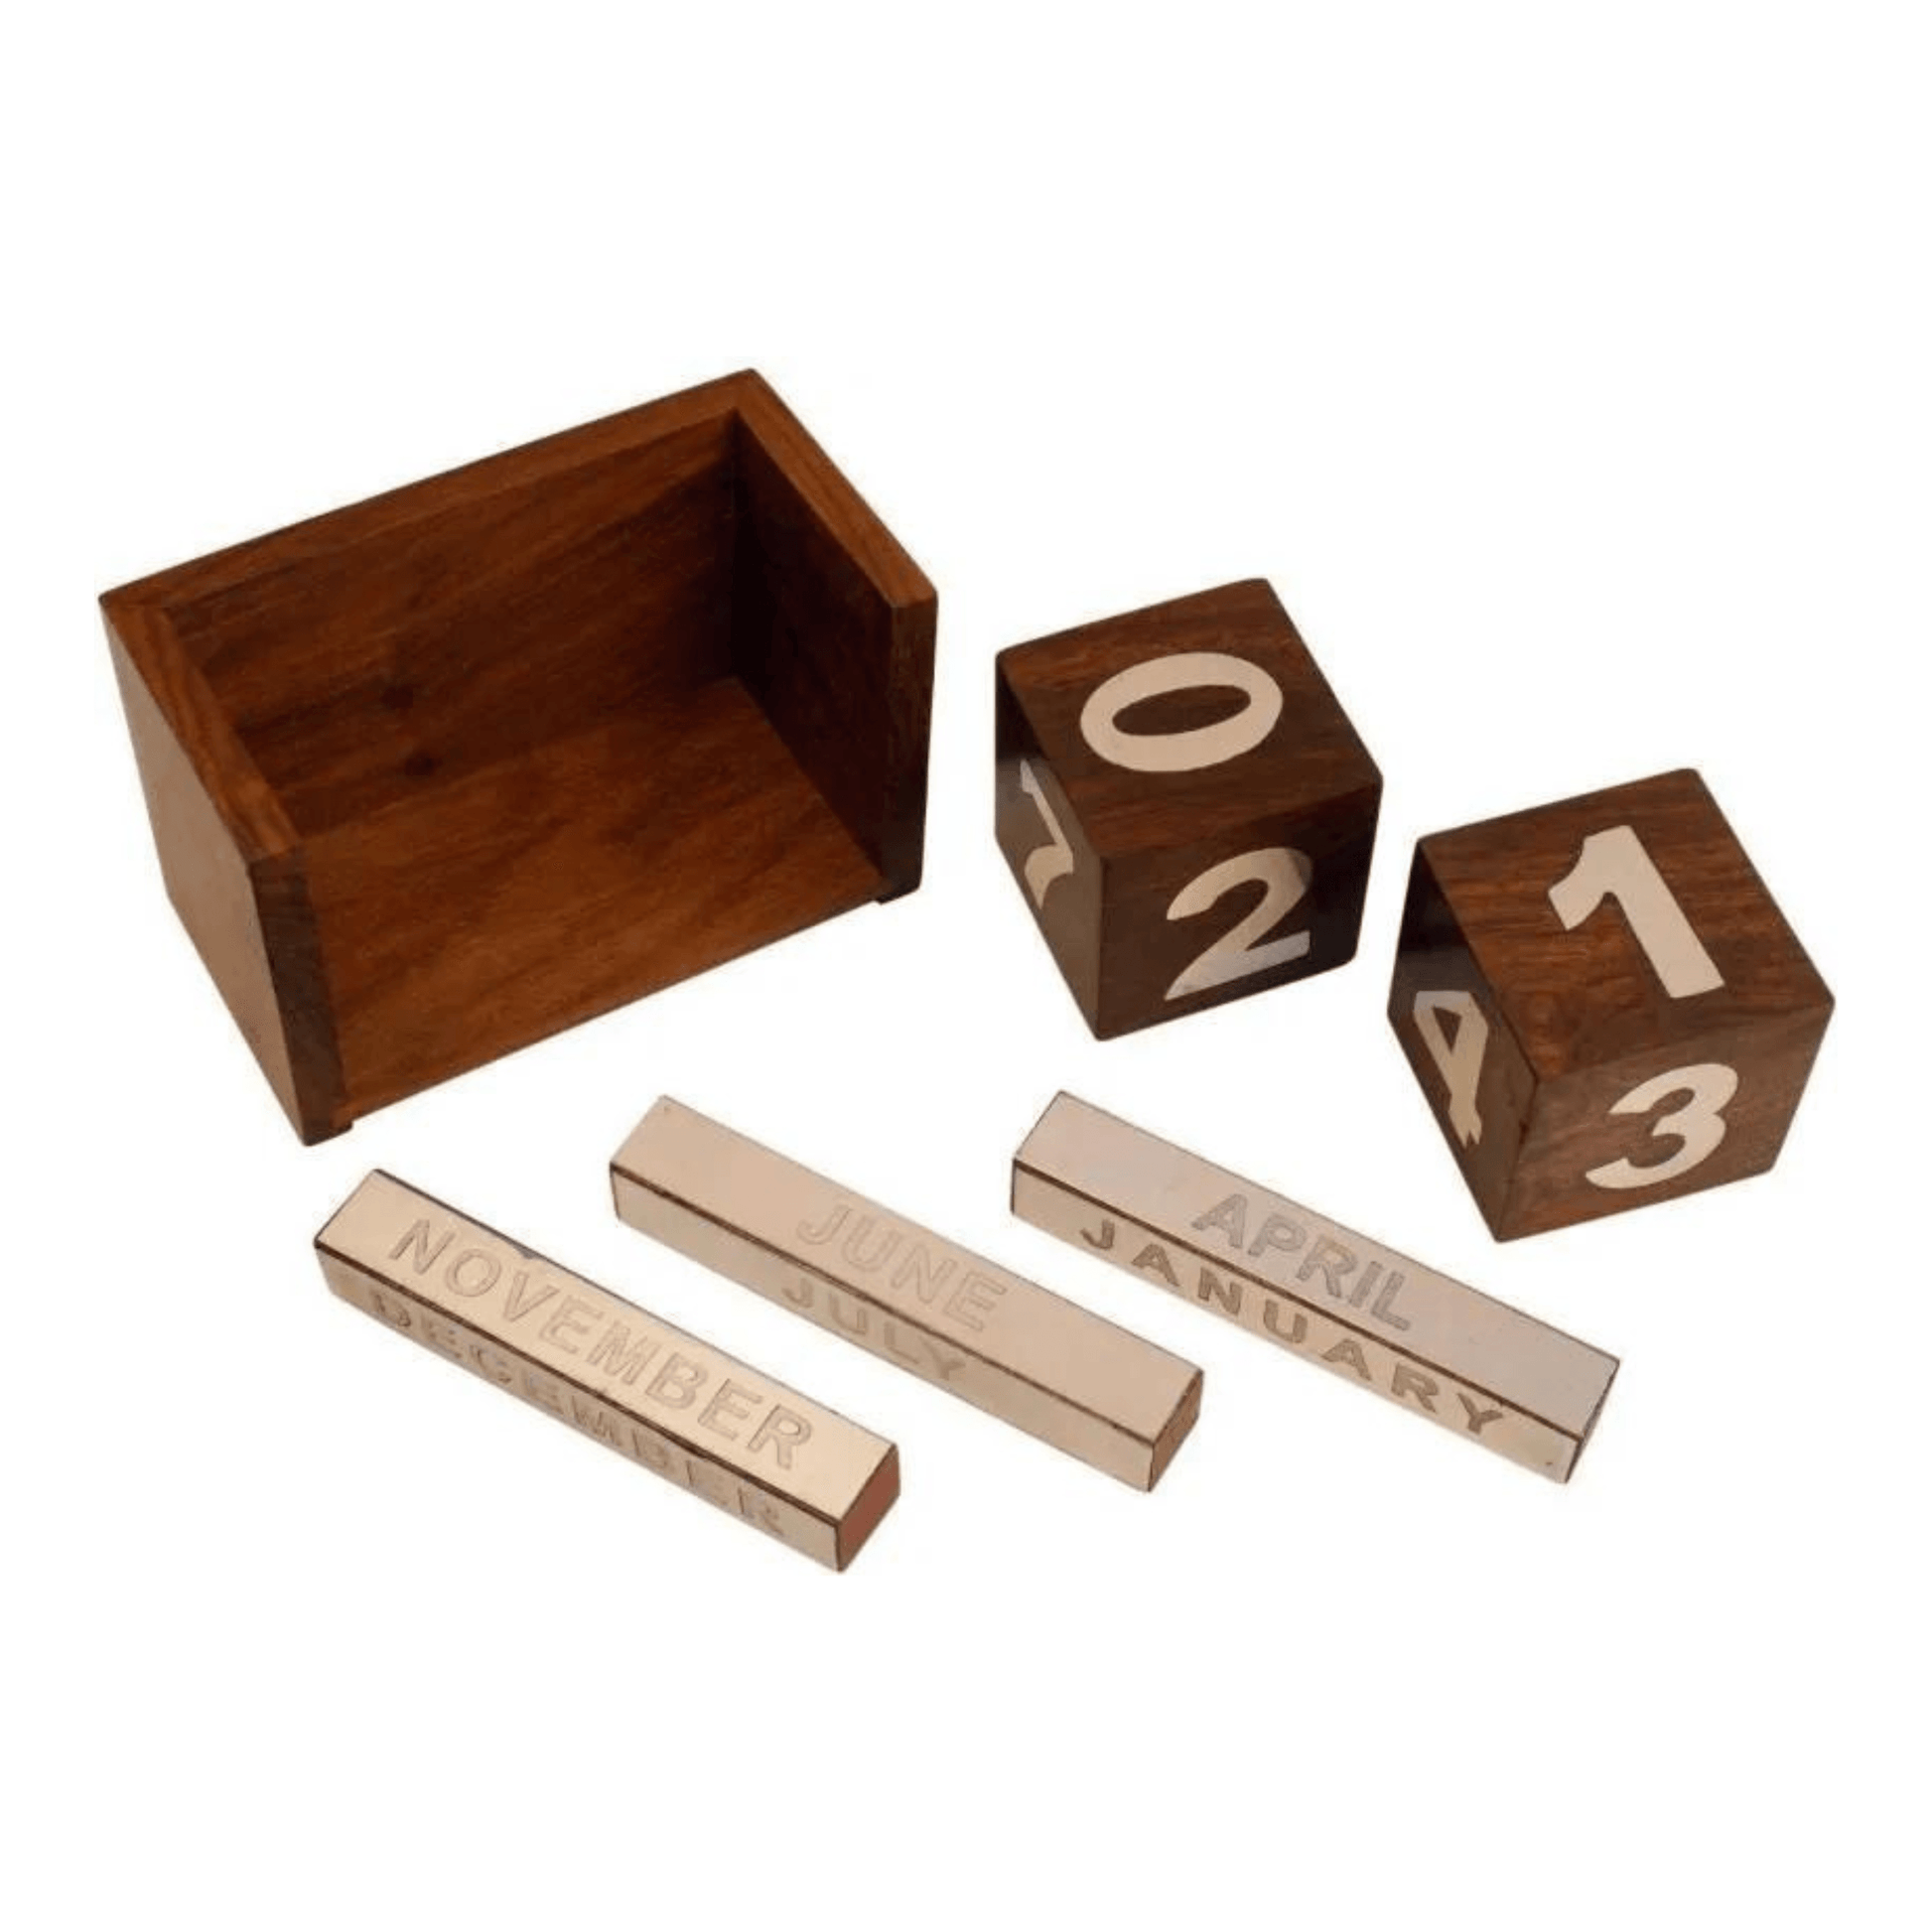 Perpetual Wooden Calendar for Desk - Stylla London